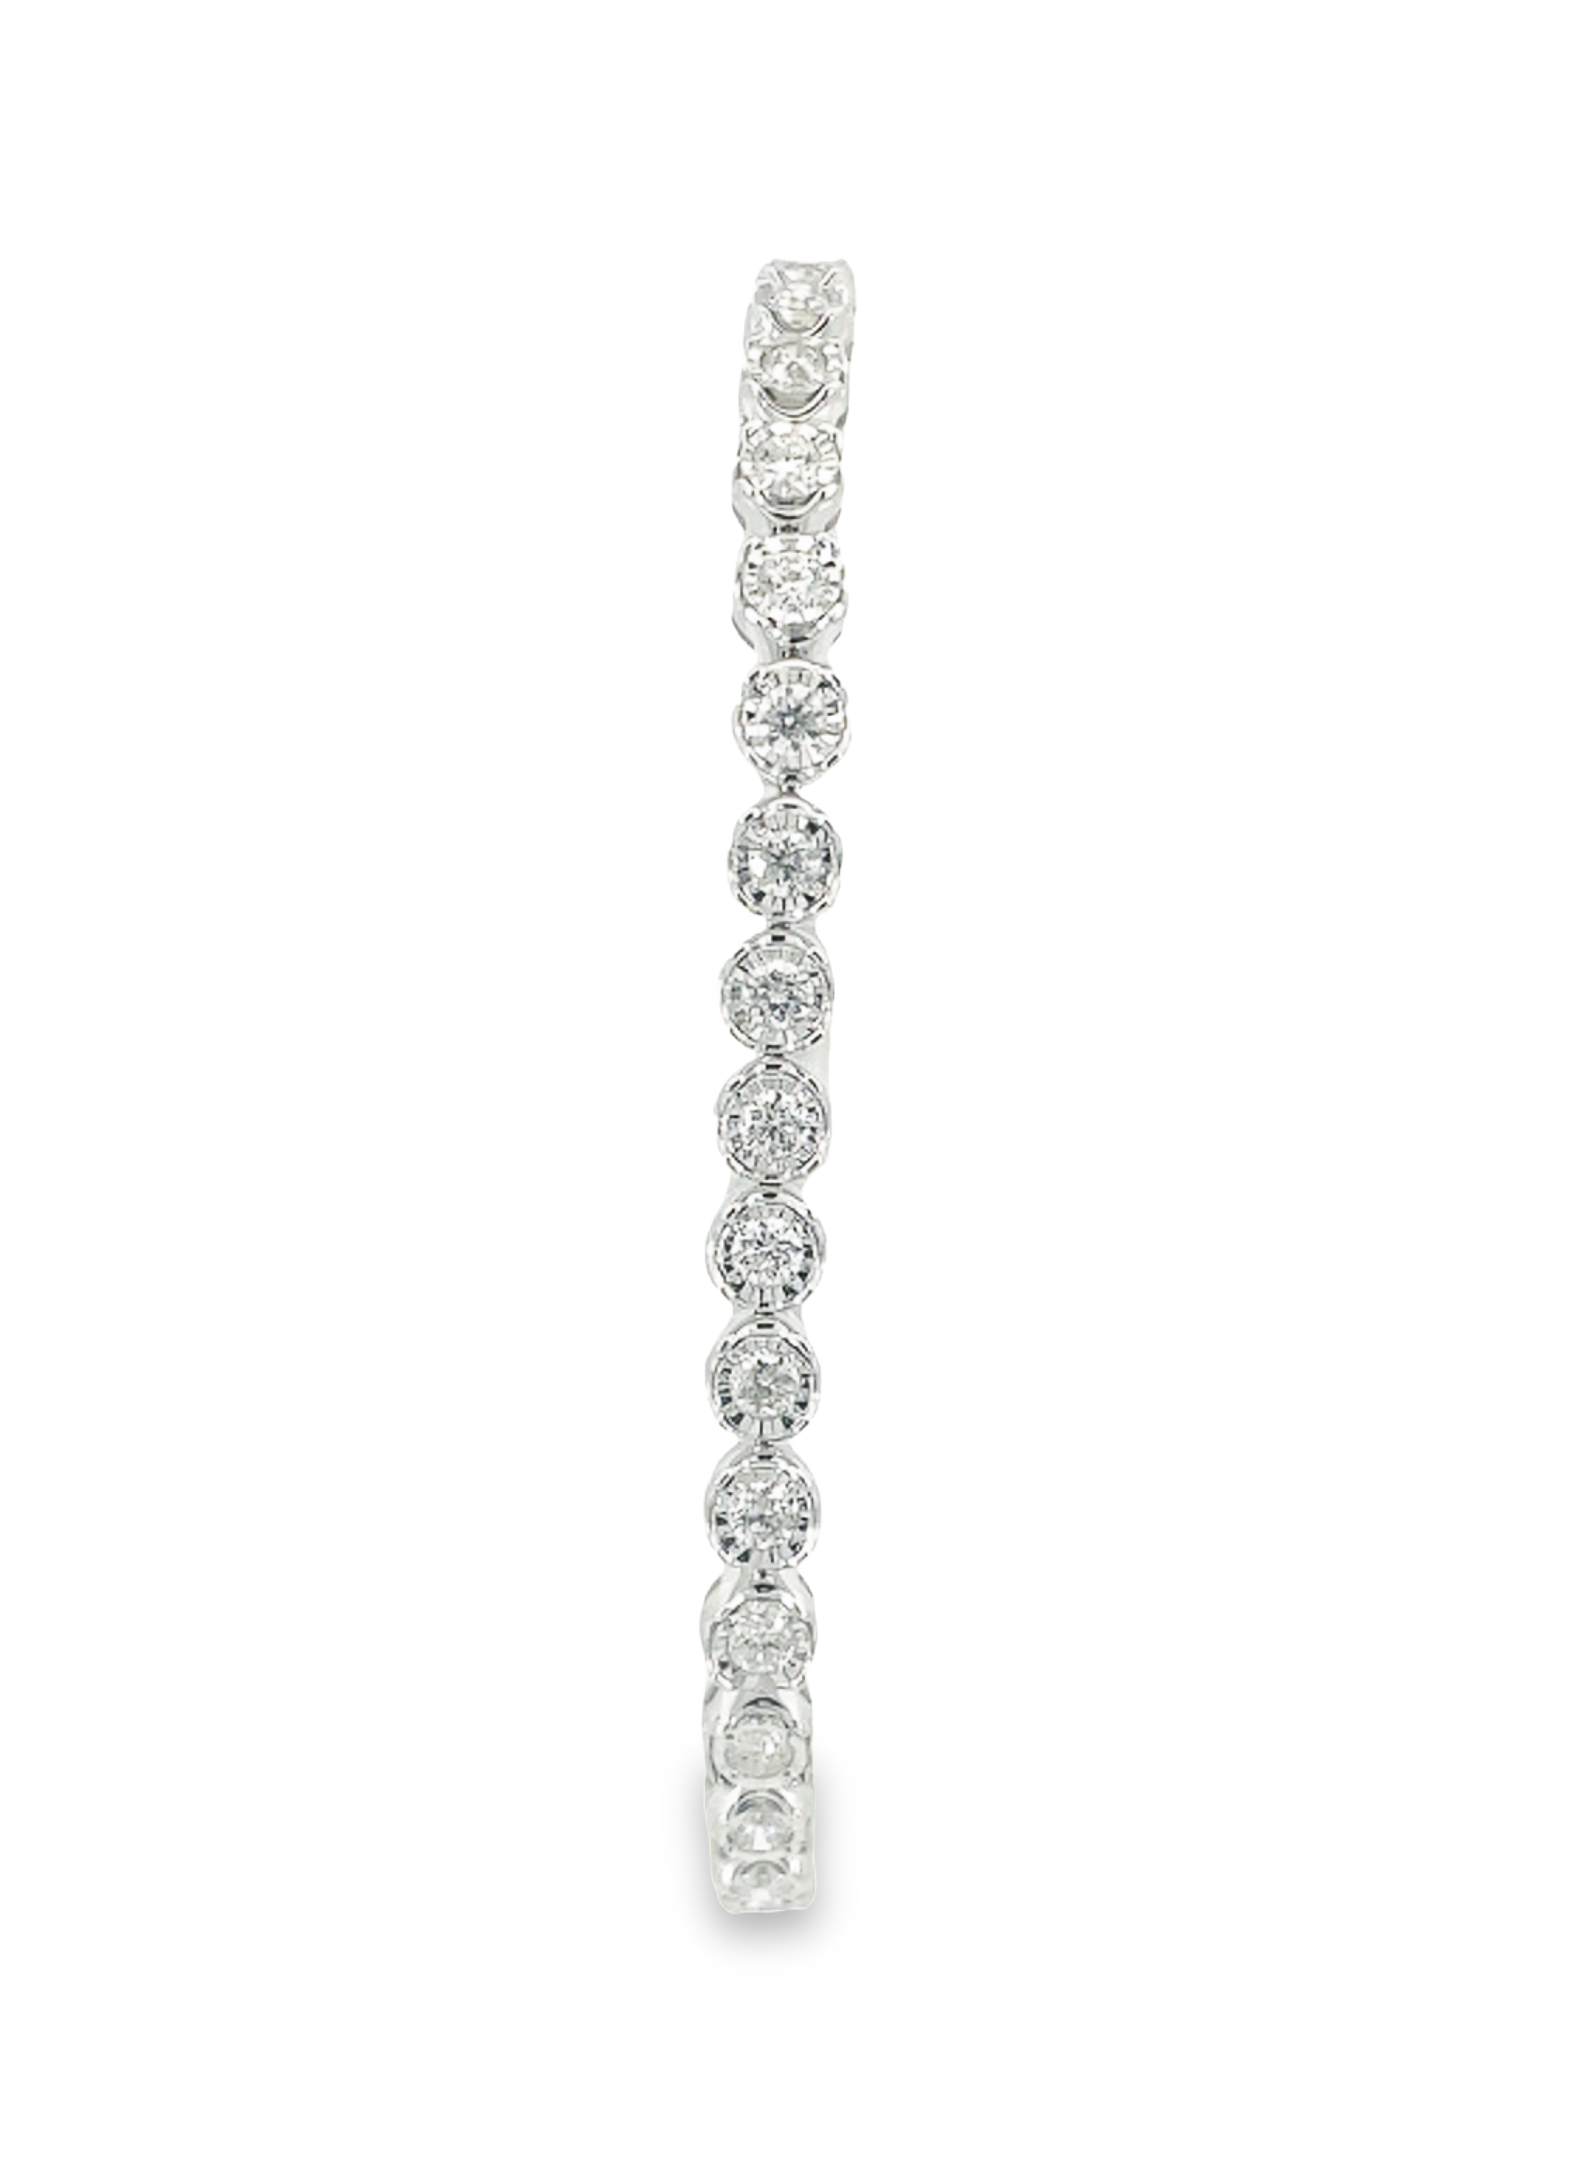 14K White Gold 7.97 CTW Diamond Bracelet